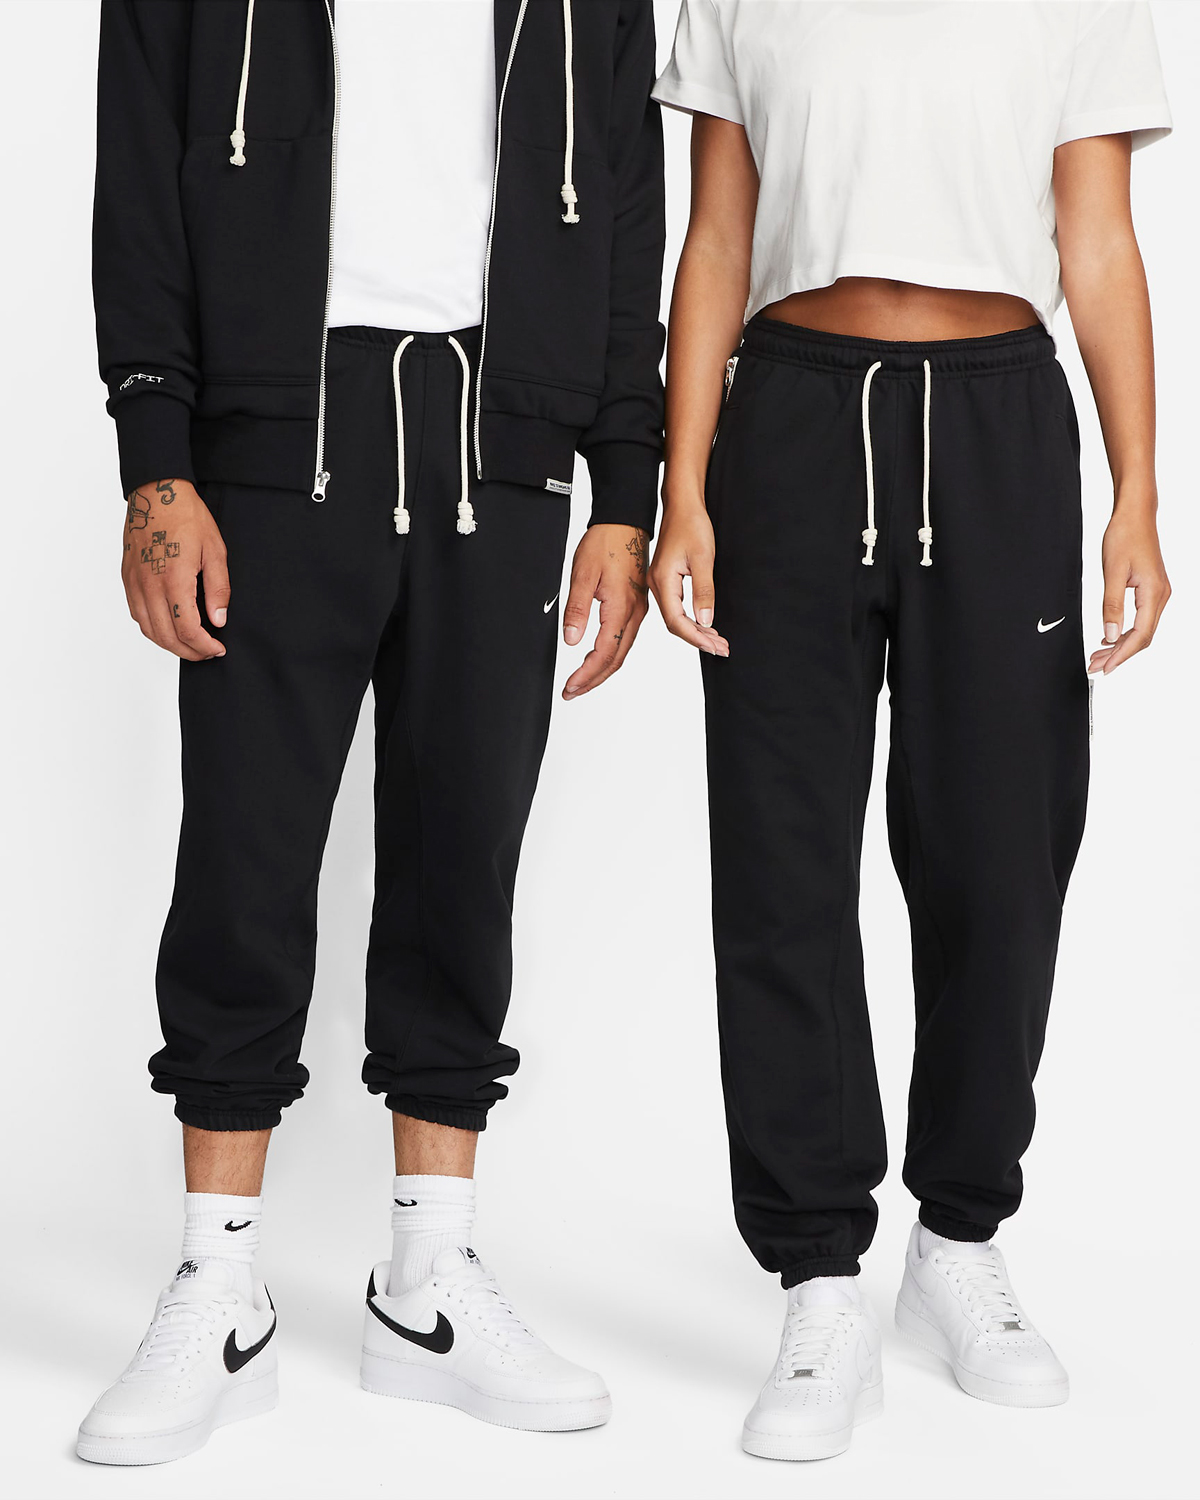 Nike-Standard-Issue-Pants-Black